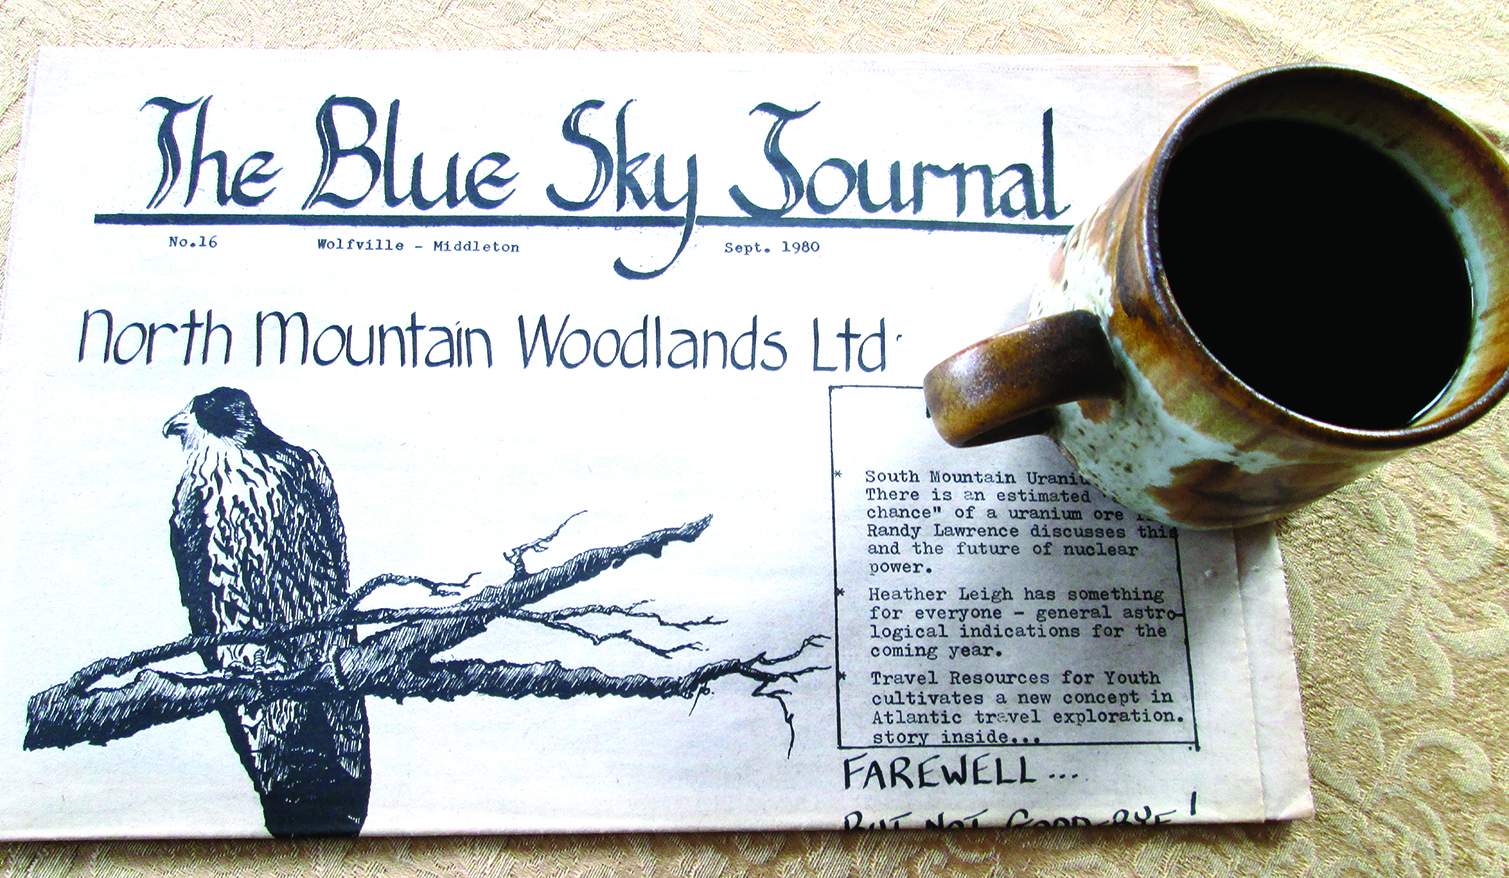 The Blue Sky Journal